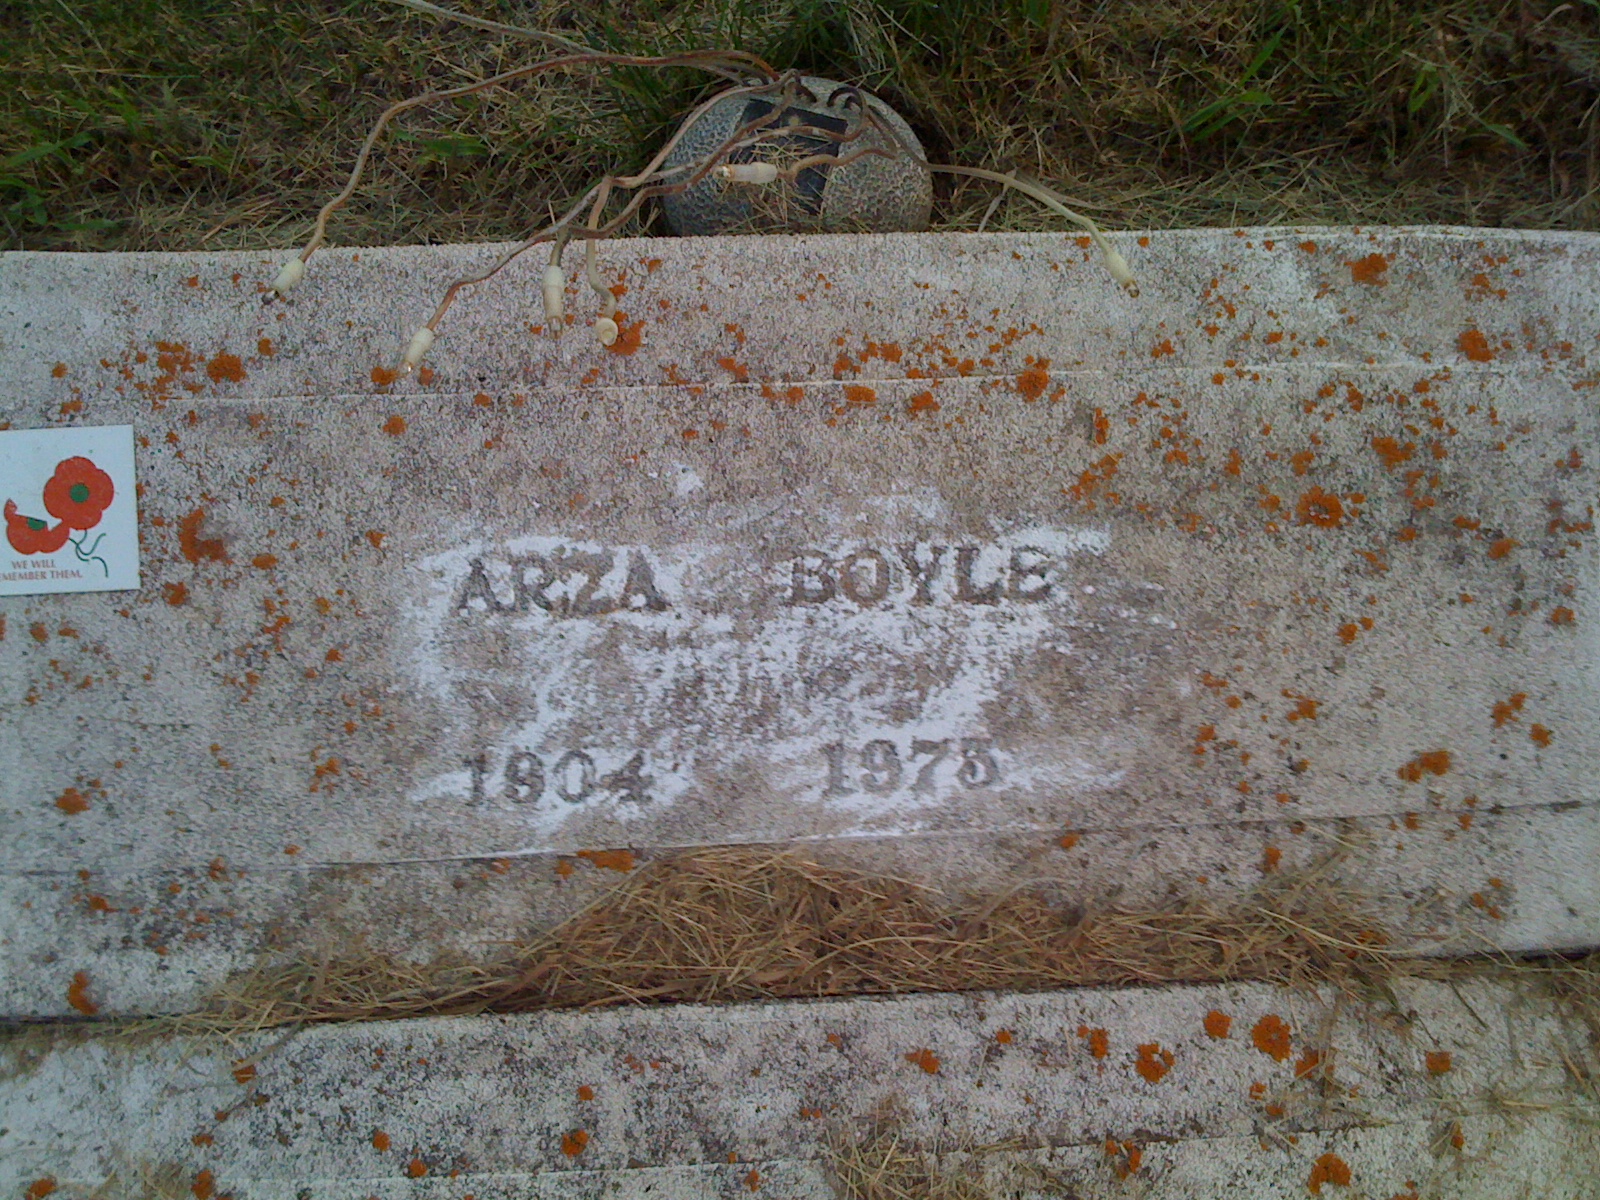 ArzaBoyle_tombstone.JPG